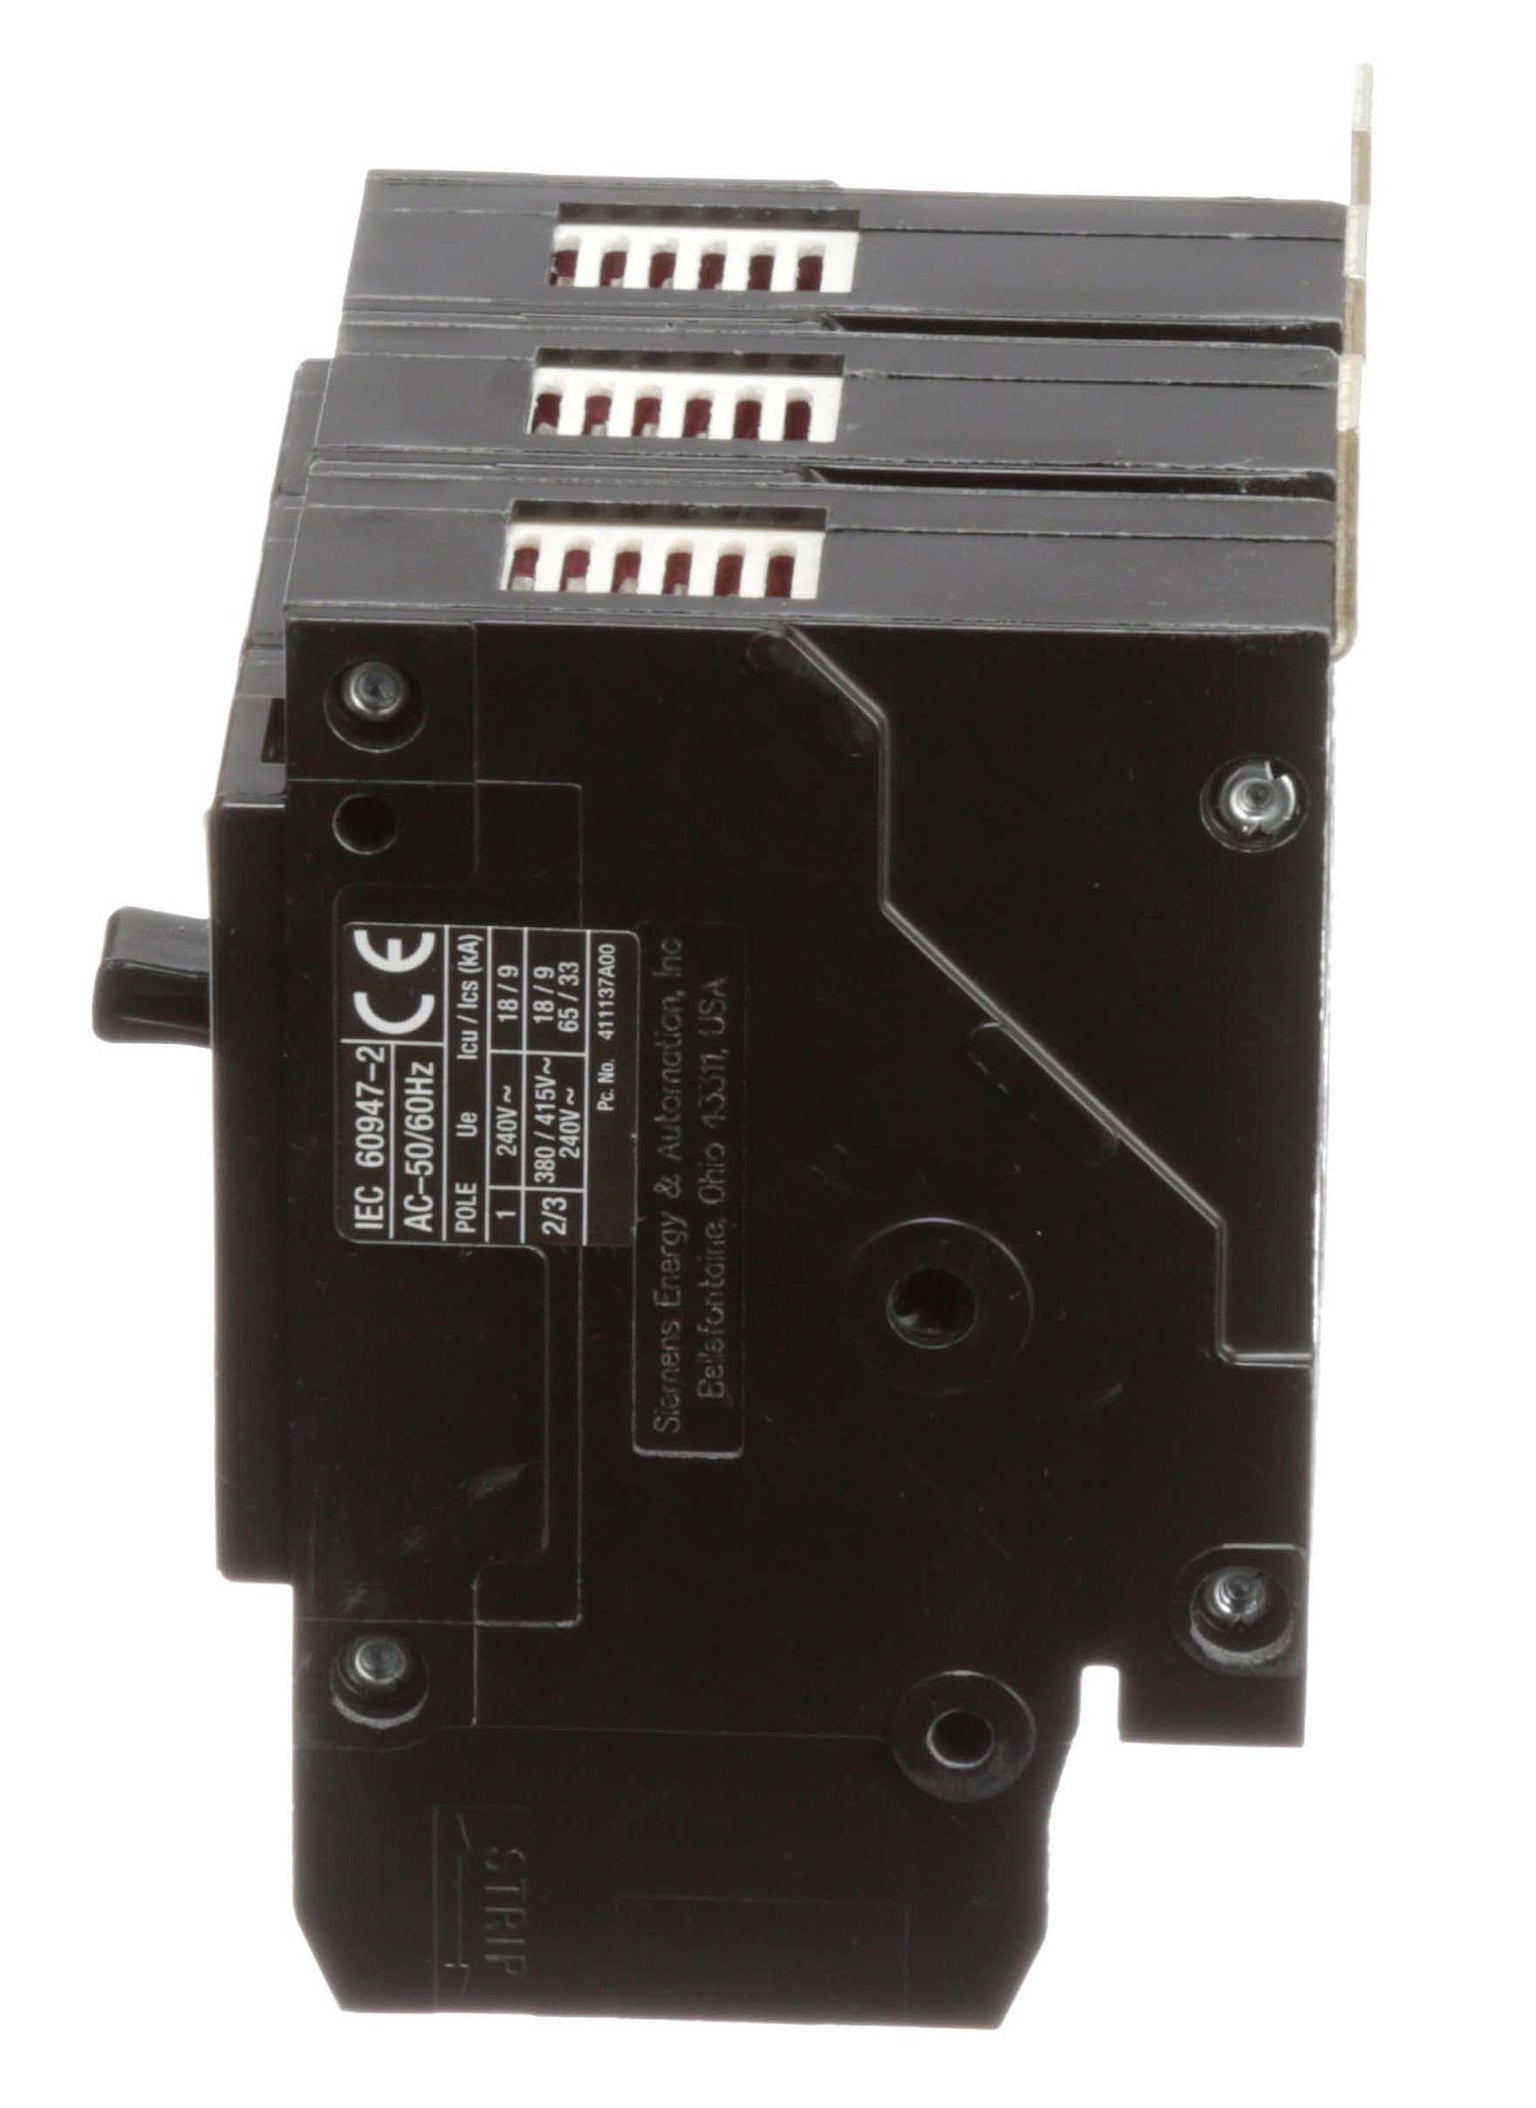 BQD6340 - Siemens - 40 Amp Molded Case Circuit Breaker